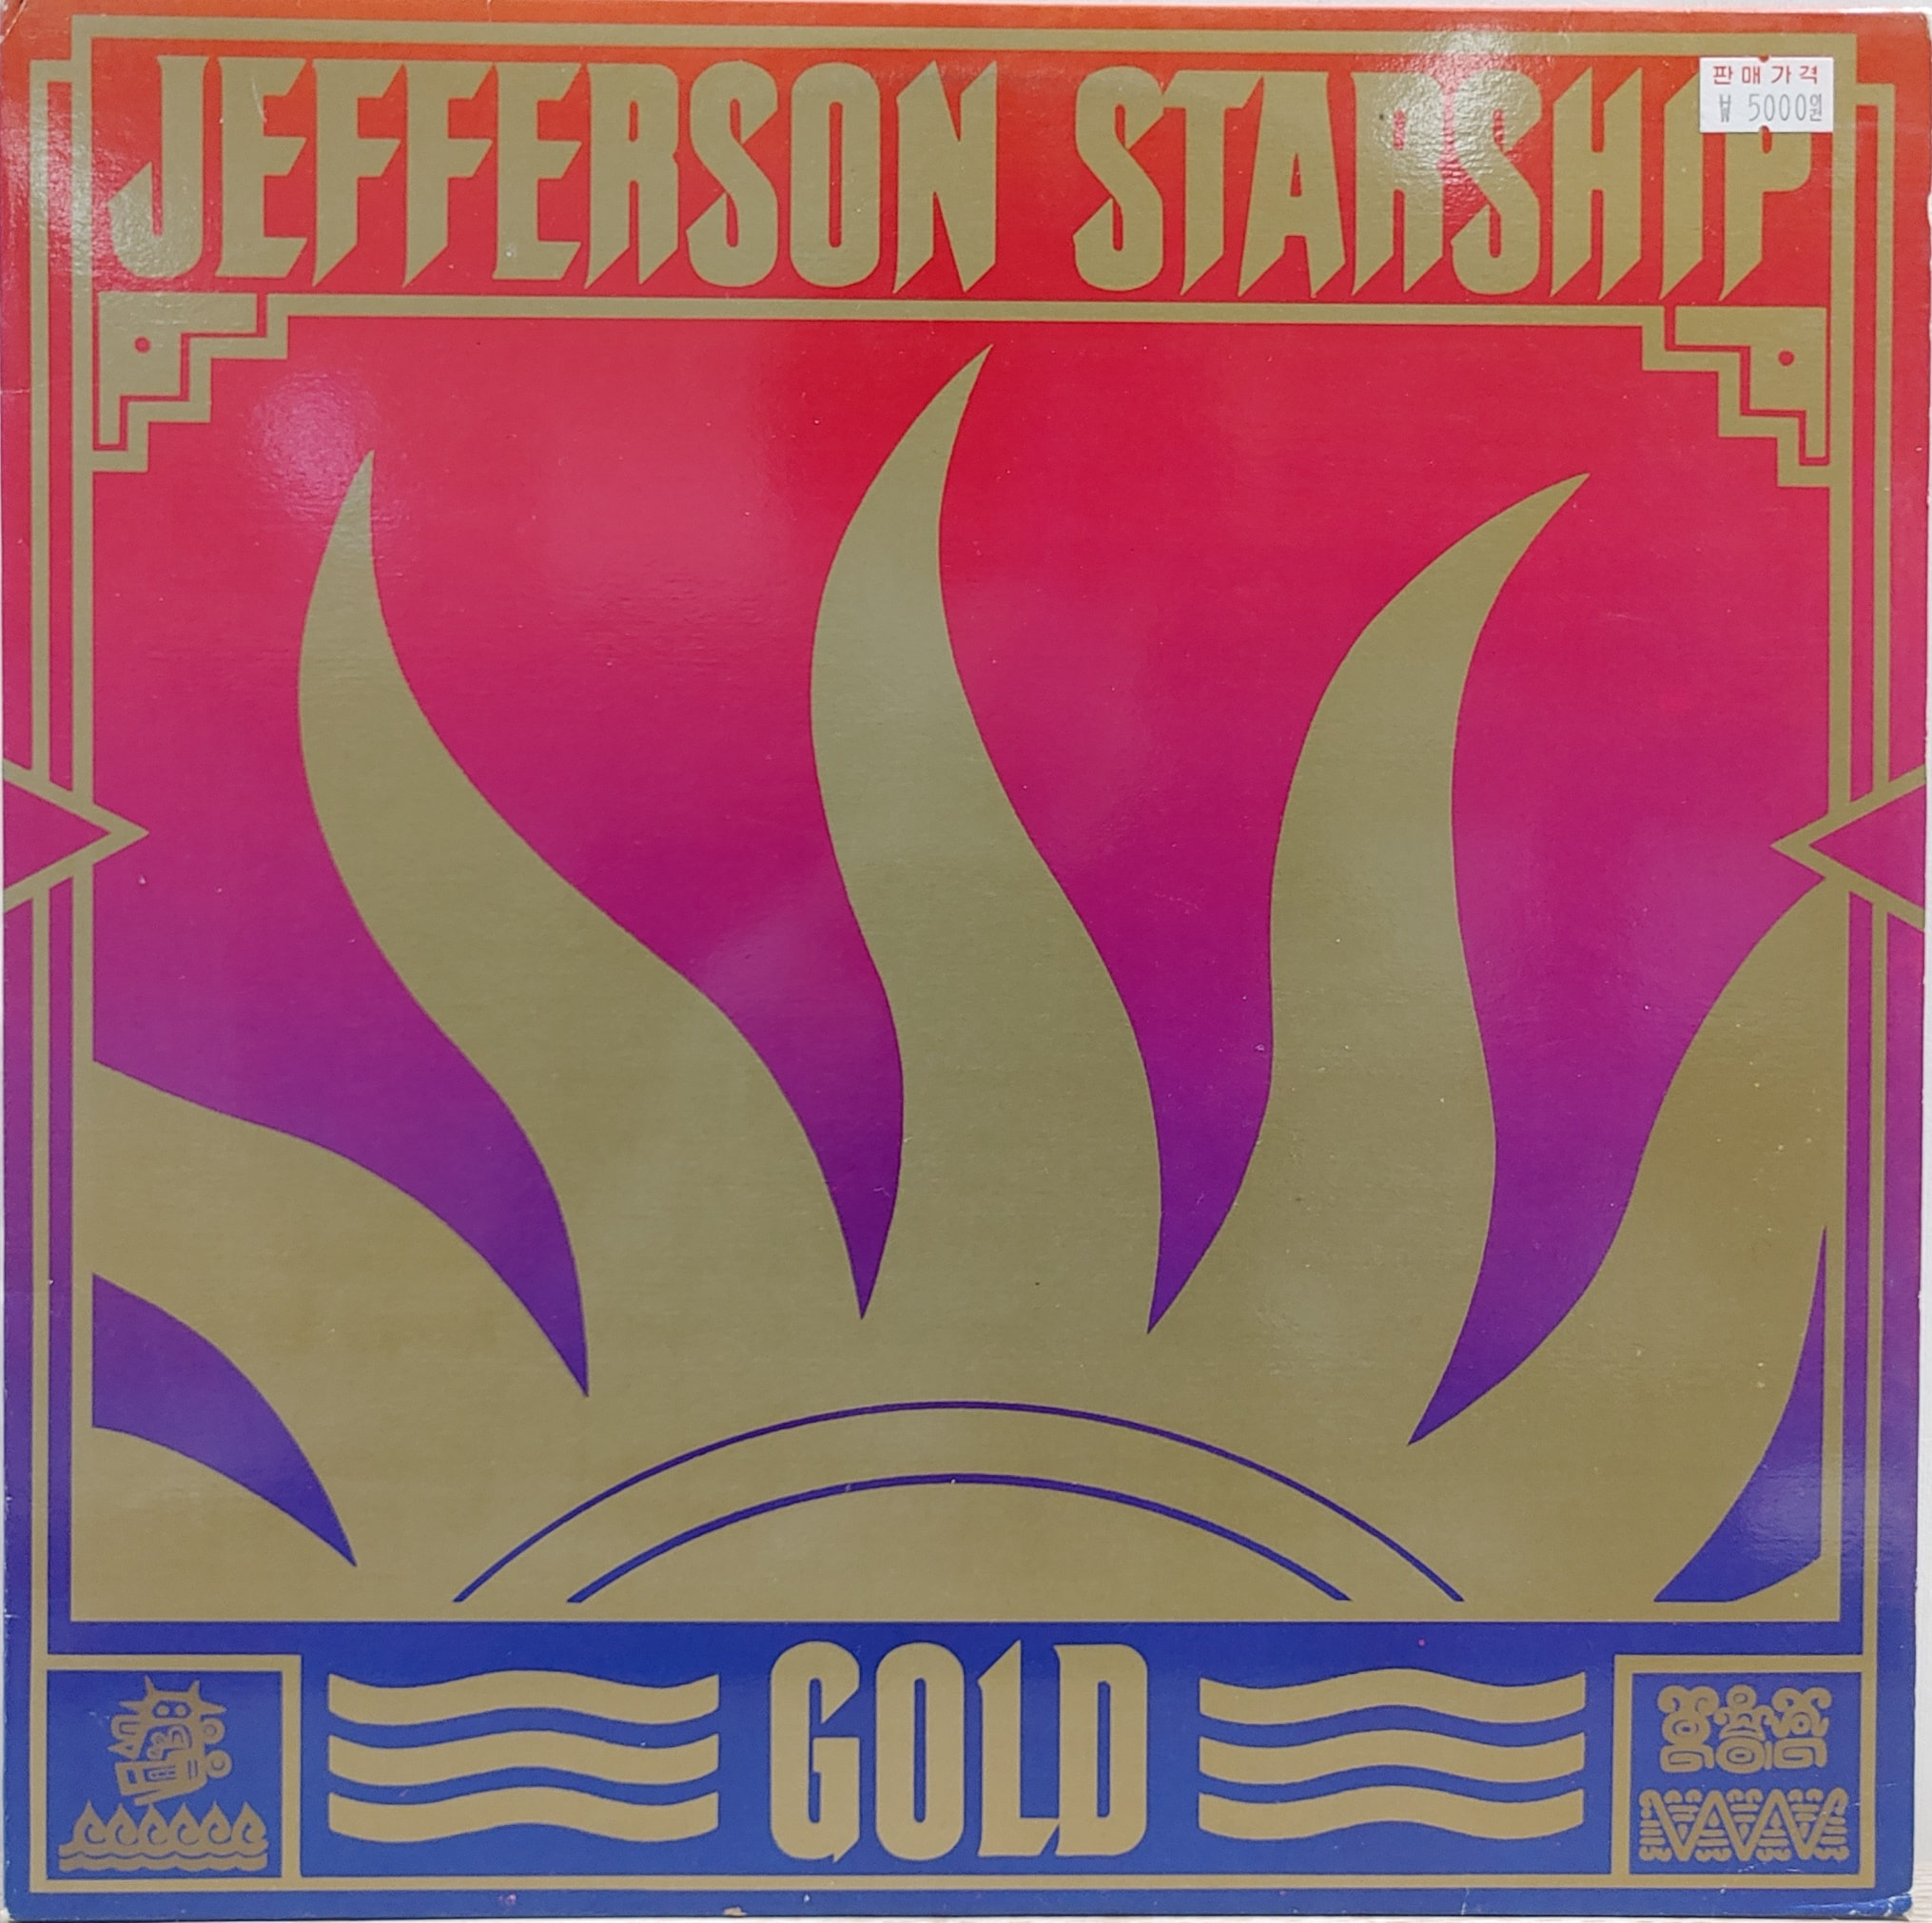 JEFFERSON STARSHIP / GOLD